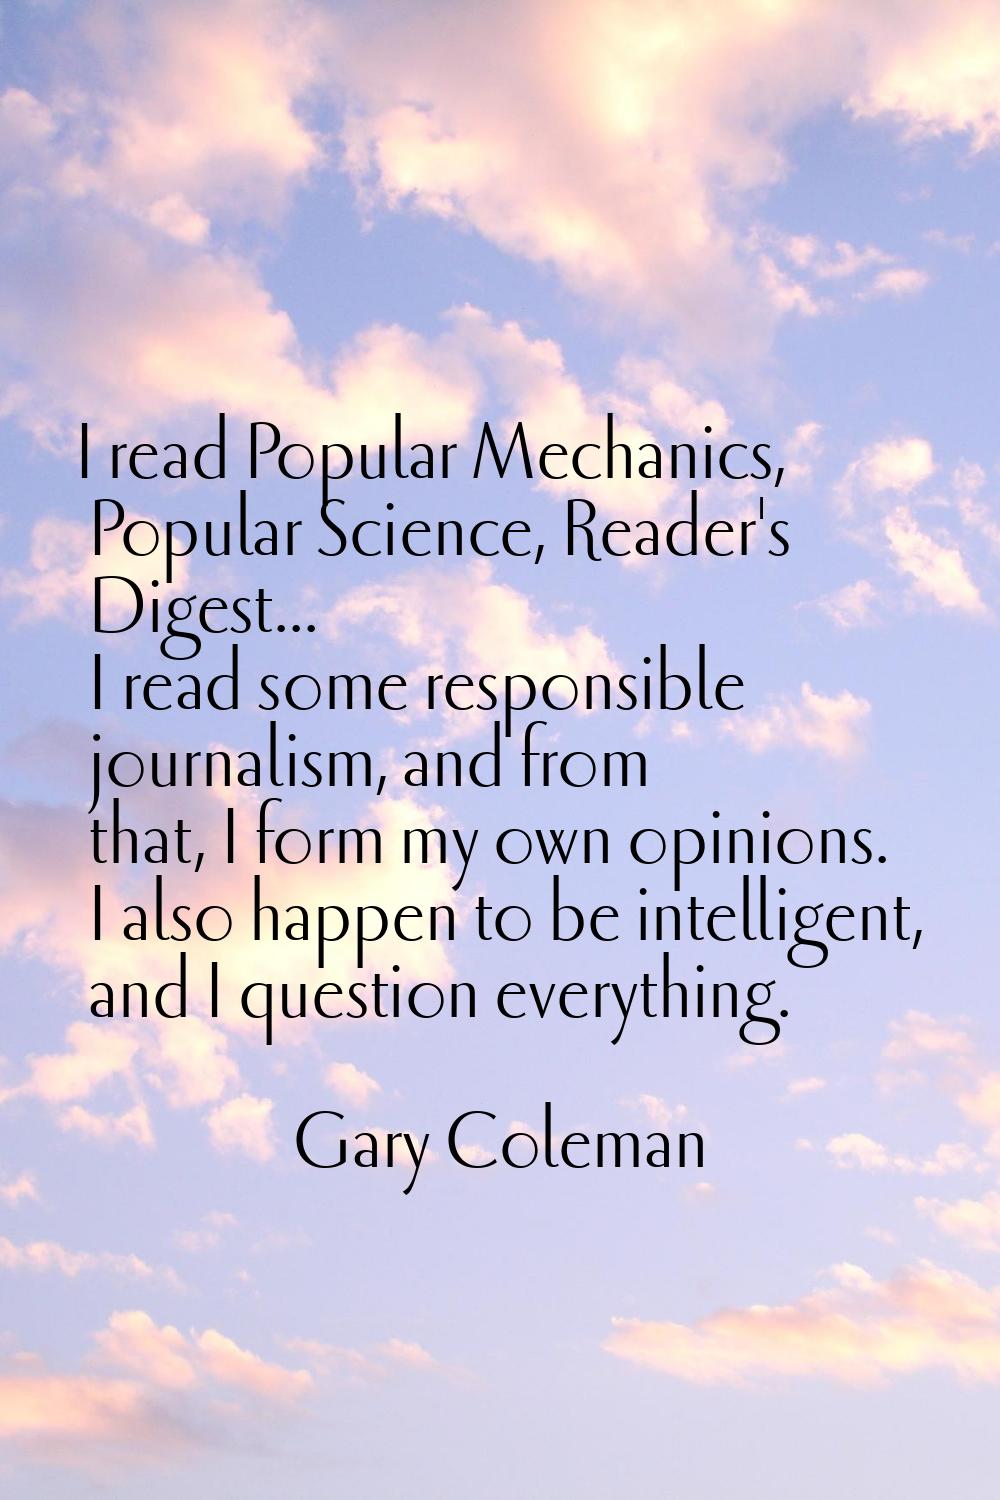 I read Popular Mechanics, Popular Science, Reader's Digest... I read some responsible journalism, a